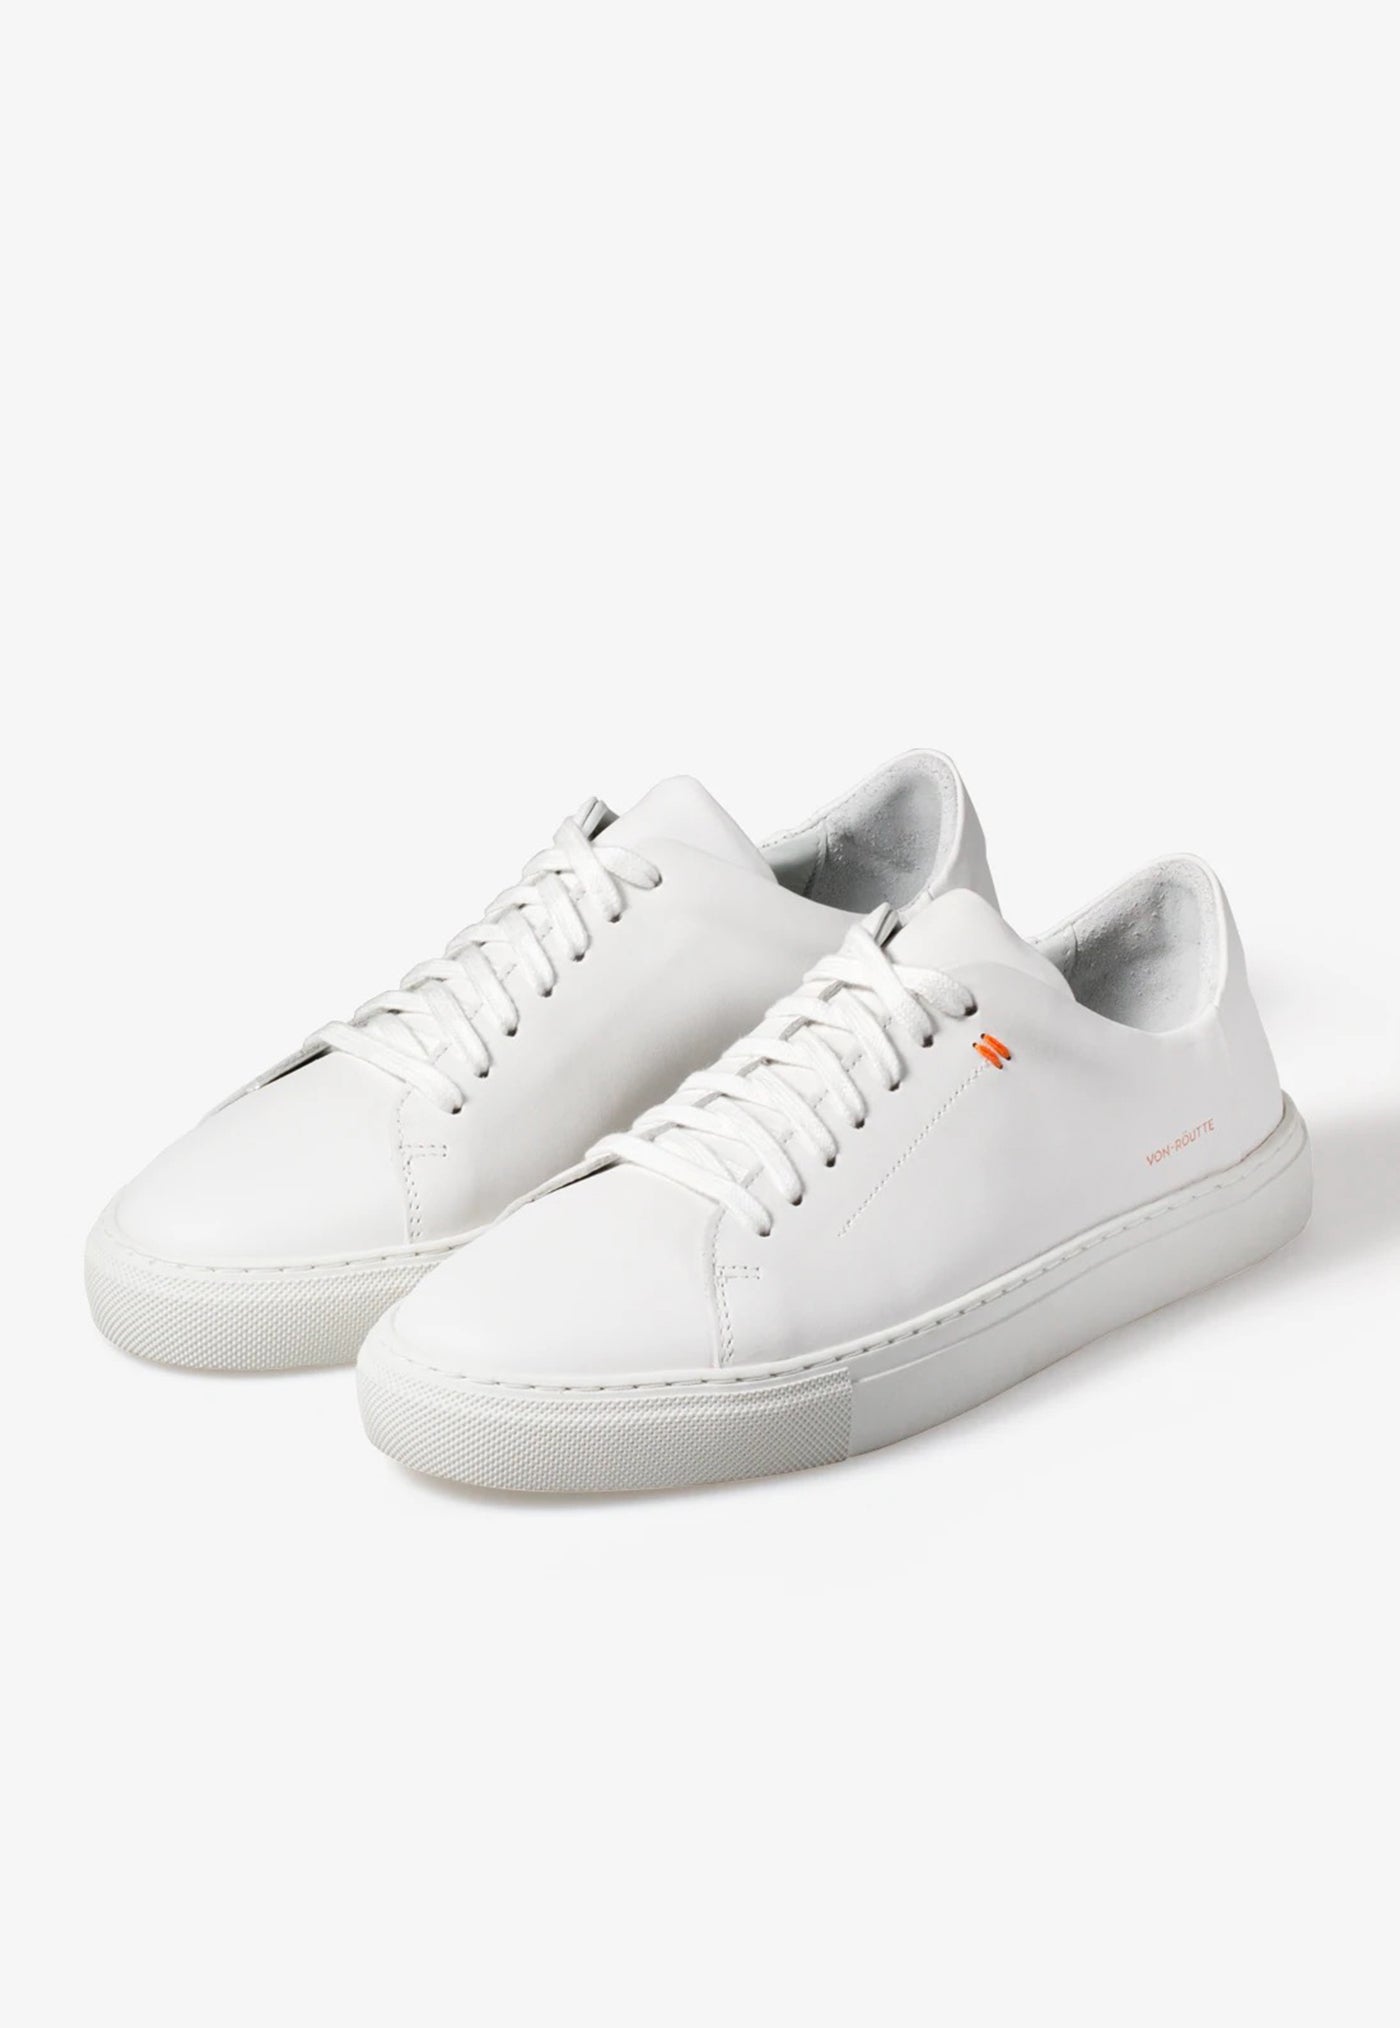 Lyon Sneaker - White sold by Angel Divine